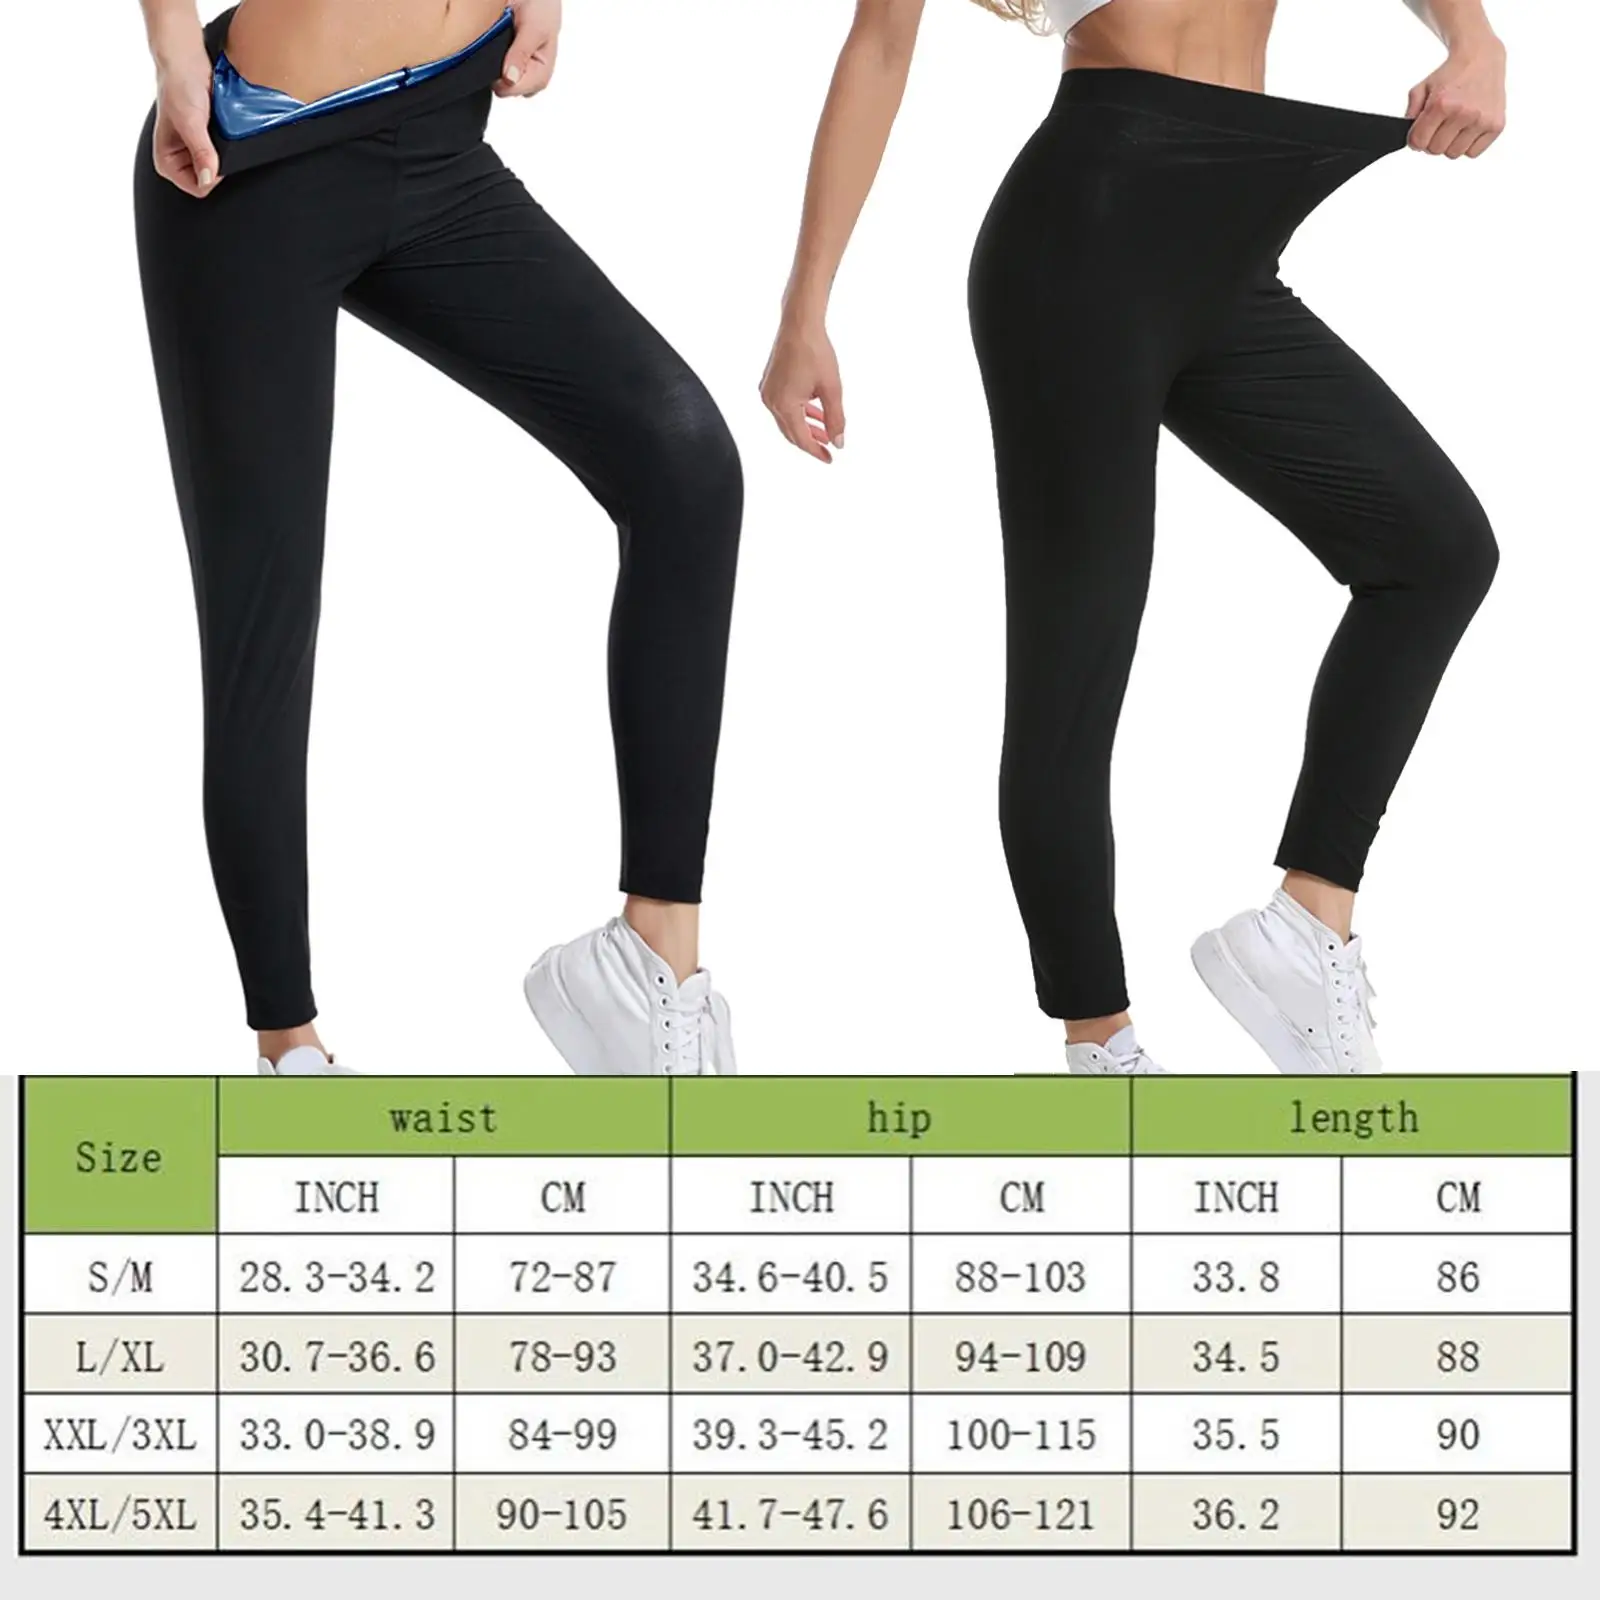 Sweat Sauna Pants Body Shaper Weight Loss Slimming Pants Women Waist Trainer Tummy Hot Thermo Sweat Leggings Fitness Workout